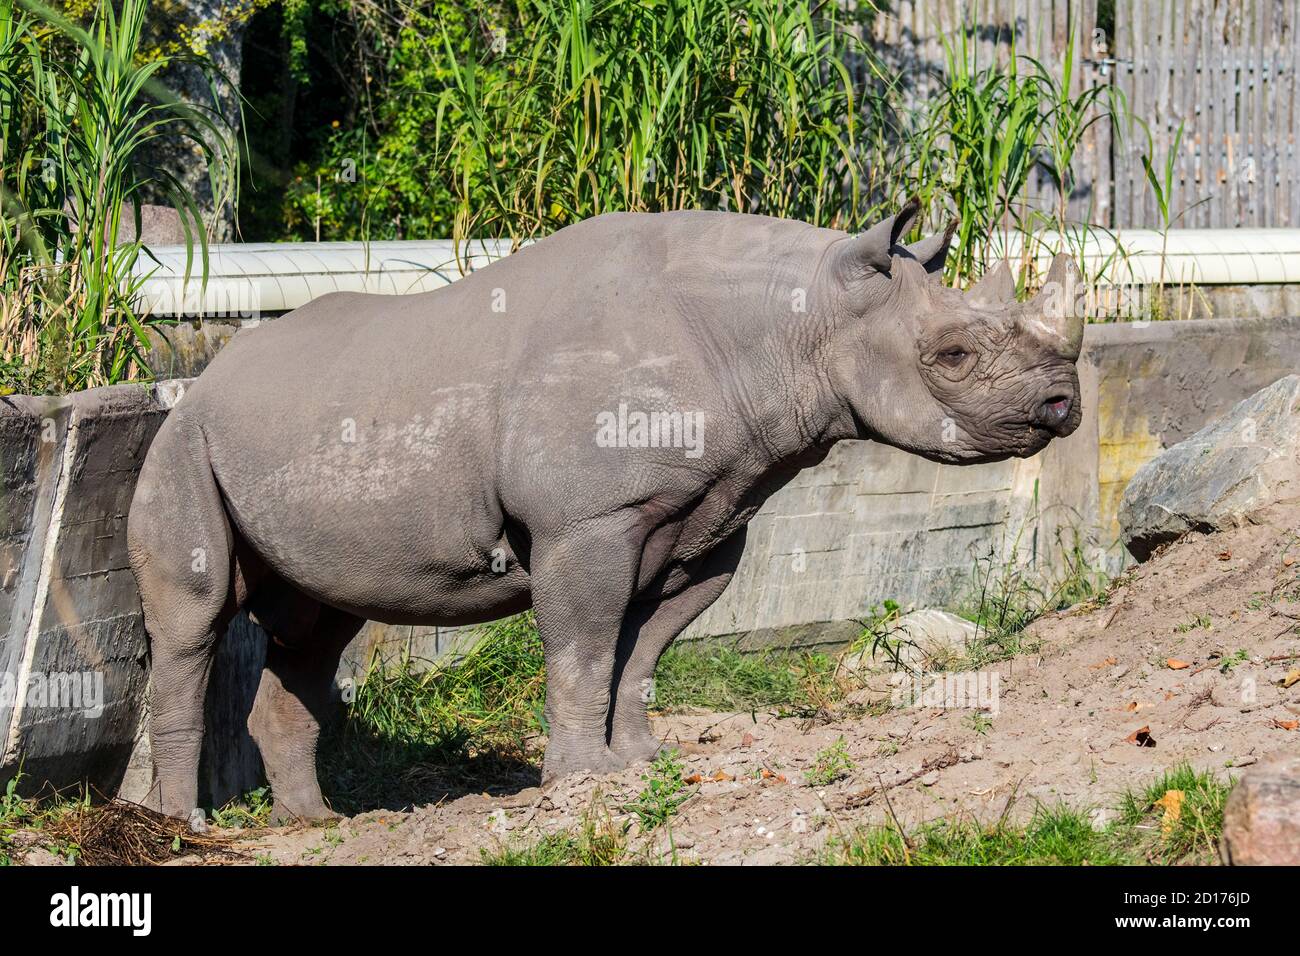 Rinoceronte nero orientale / rinoceronte nero africano orientale / orientale Rhinoceros a gancio (Diceros bicornis michaeli) in zoo Foto Stock